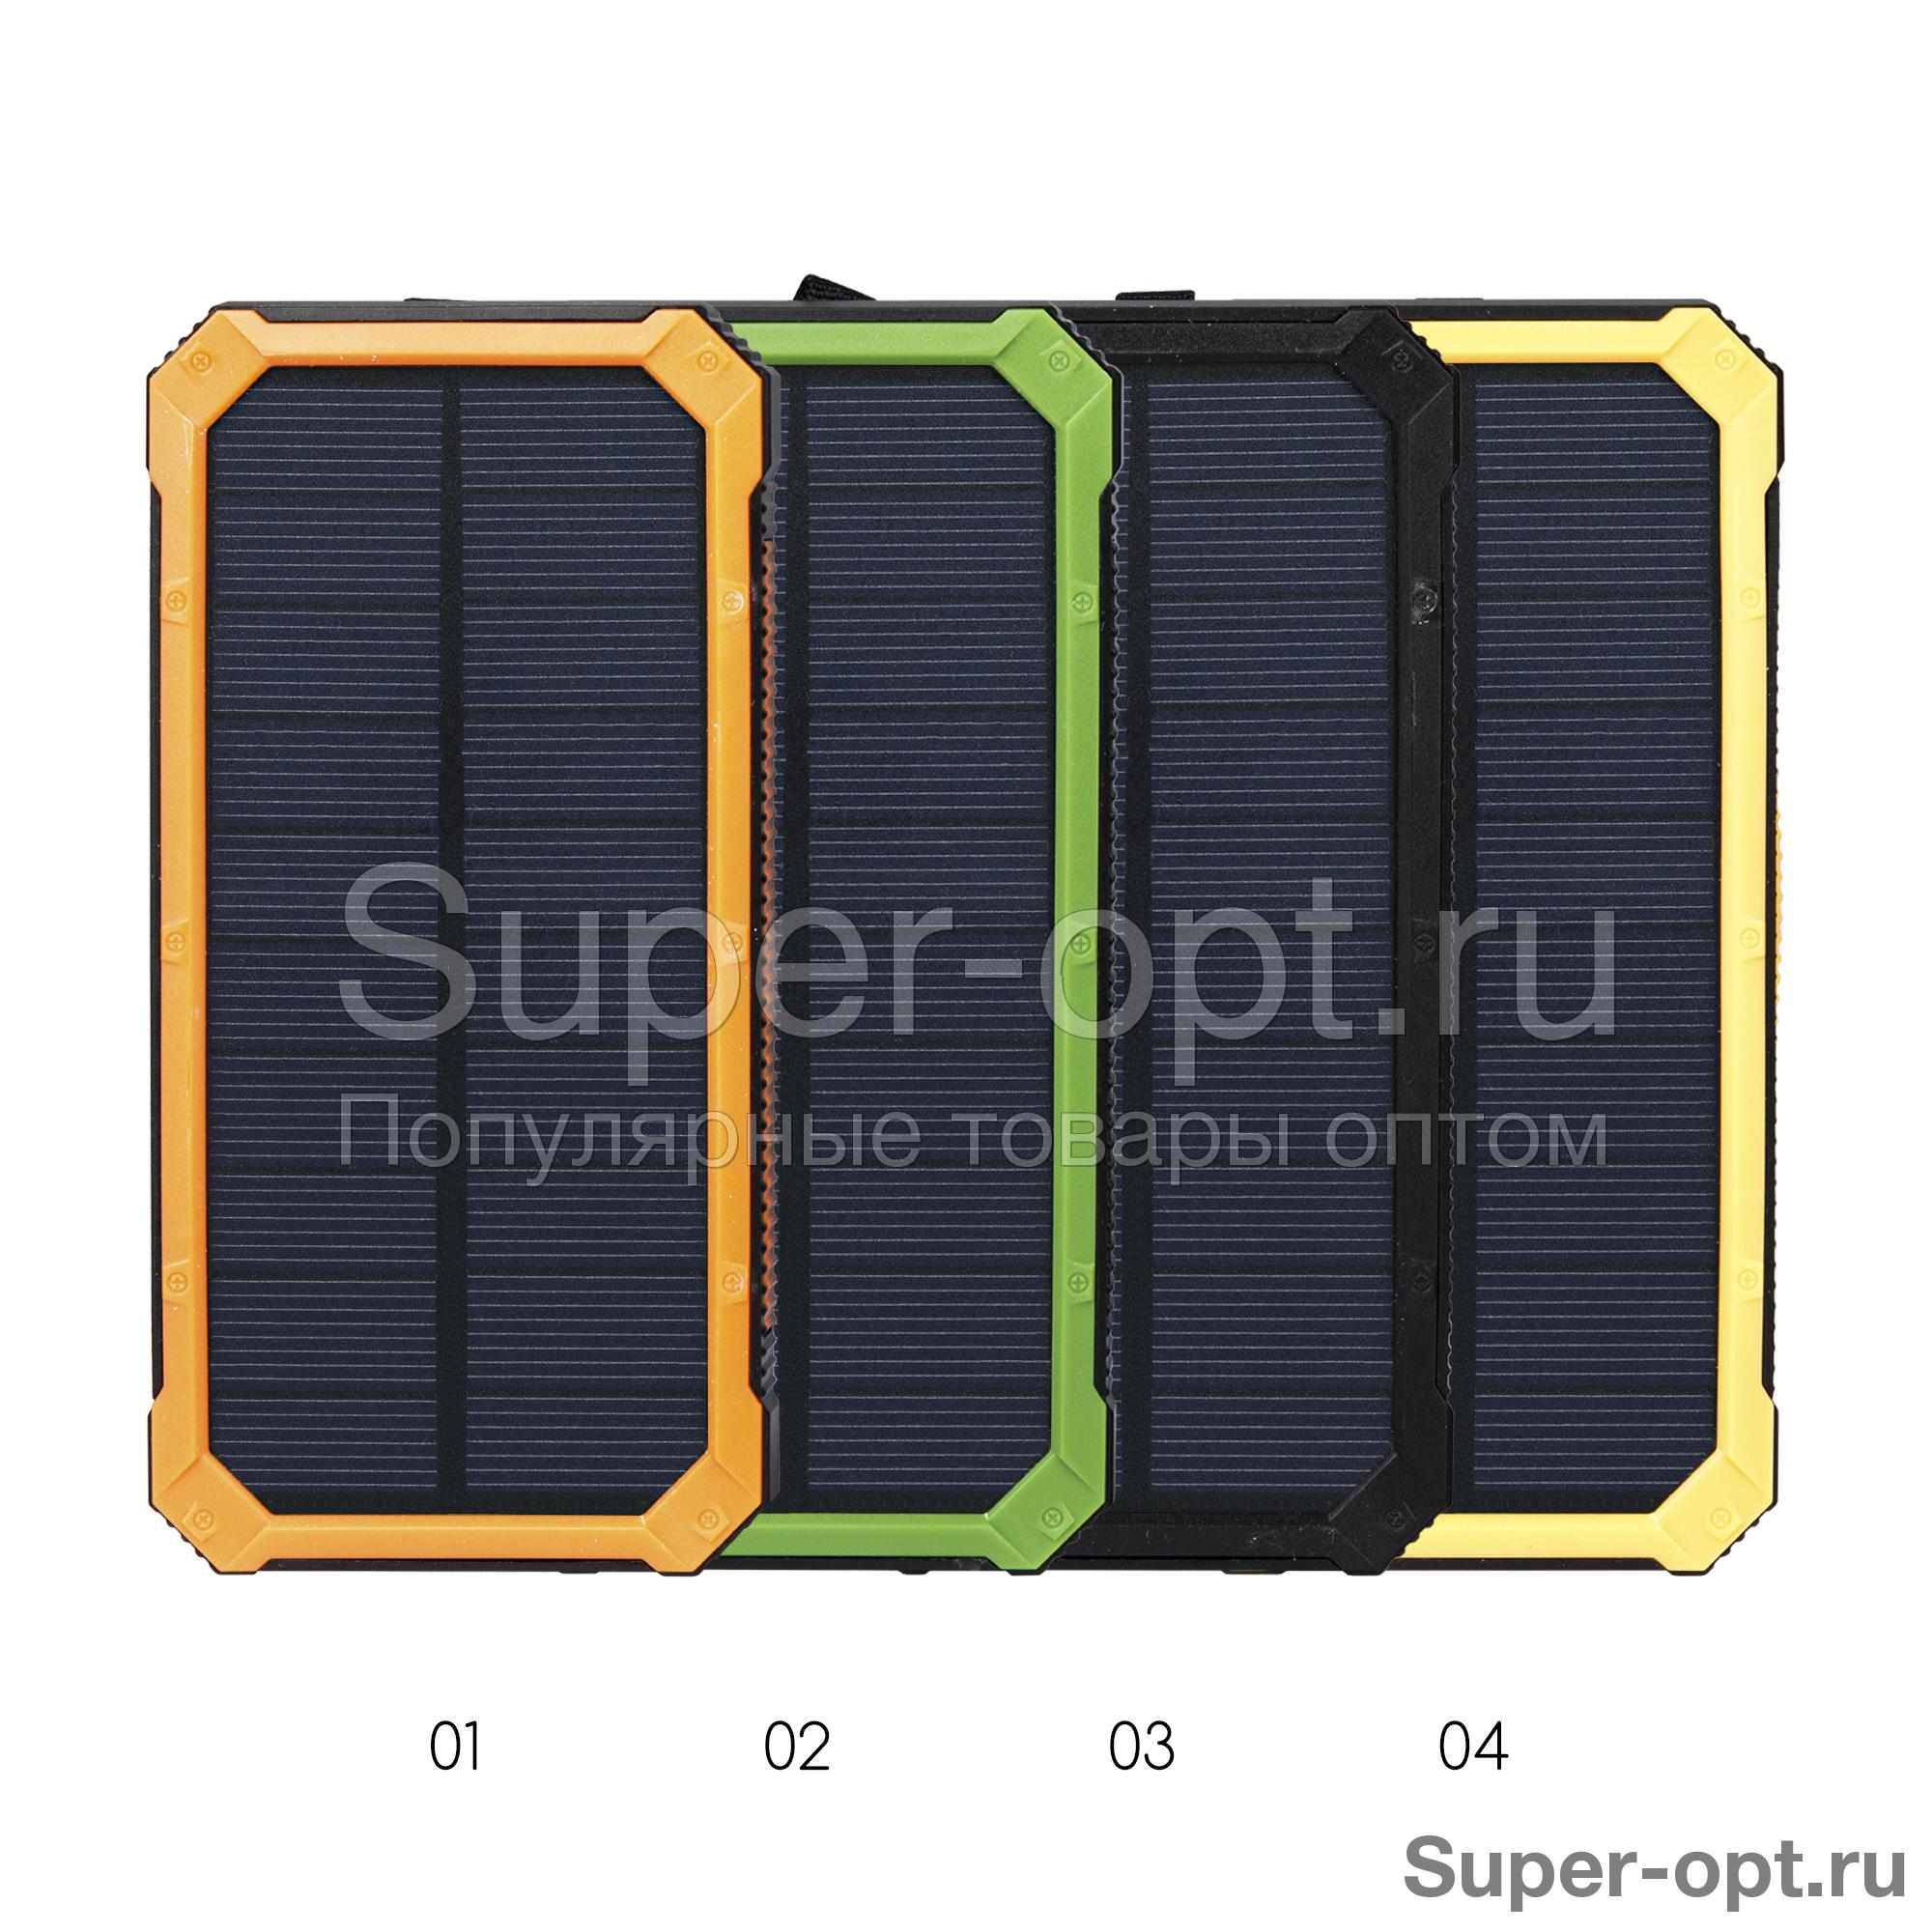 Power Bank на солнечных батареях Solar Power Box 20000 mAh